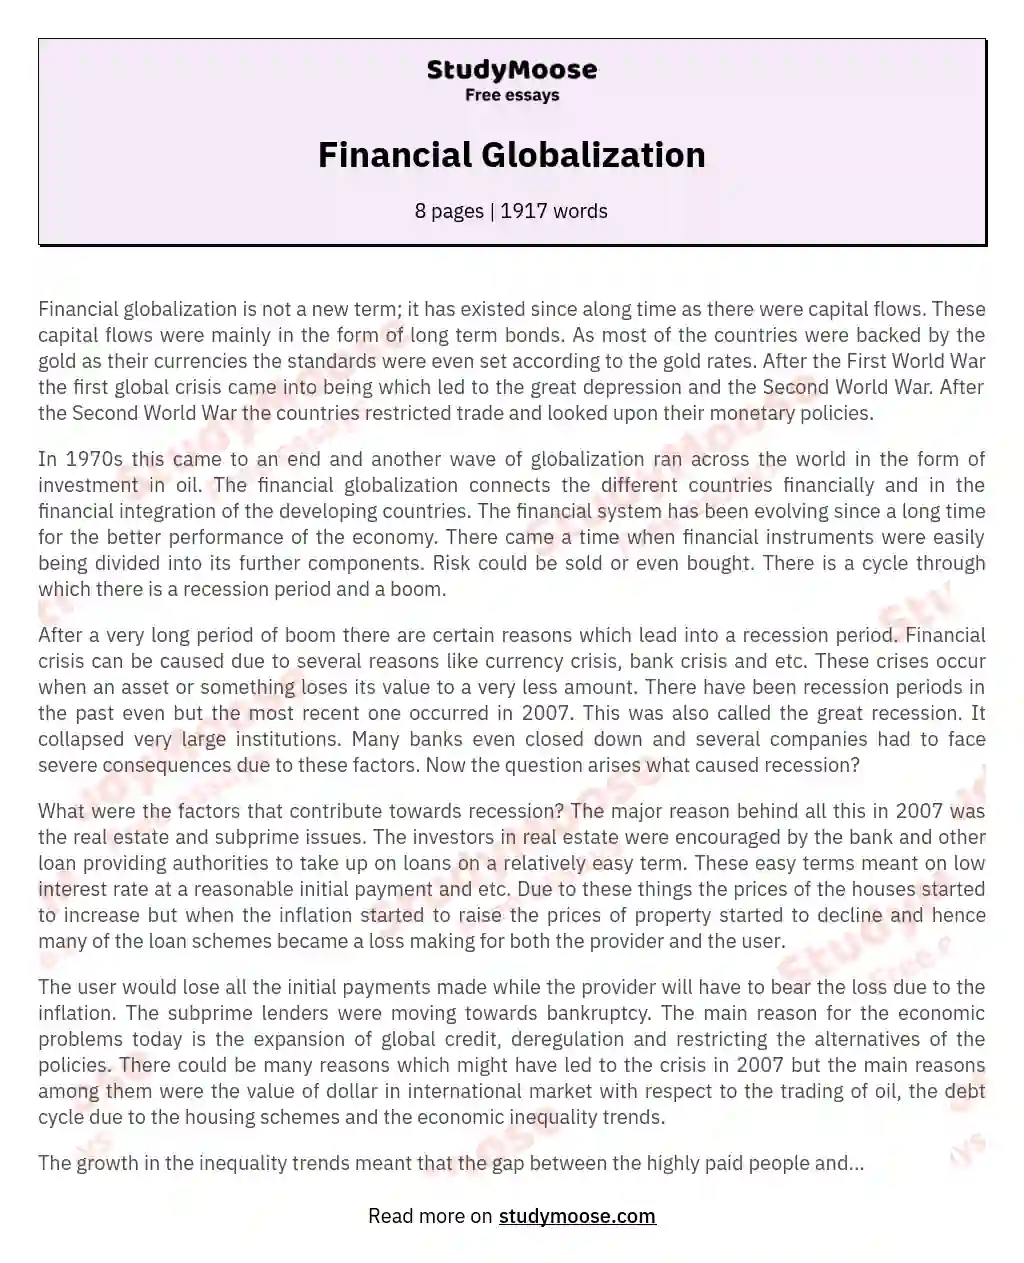 Financial Globalization essay